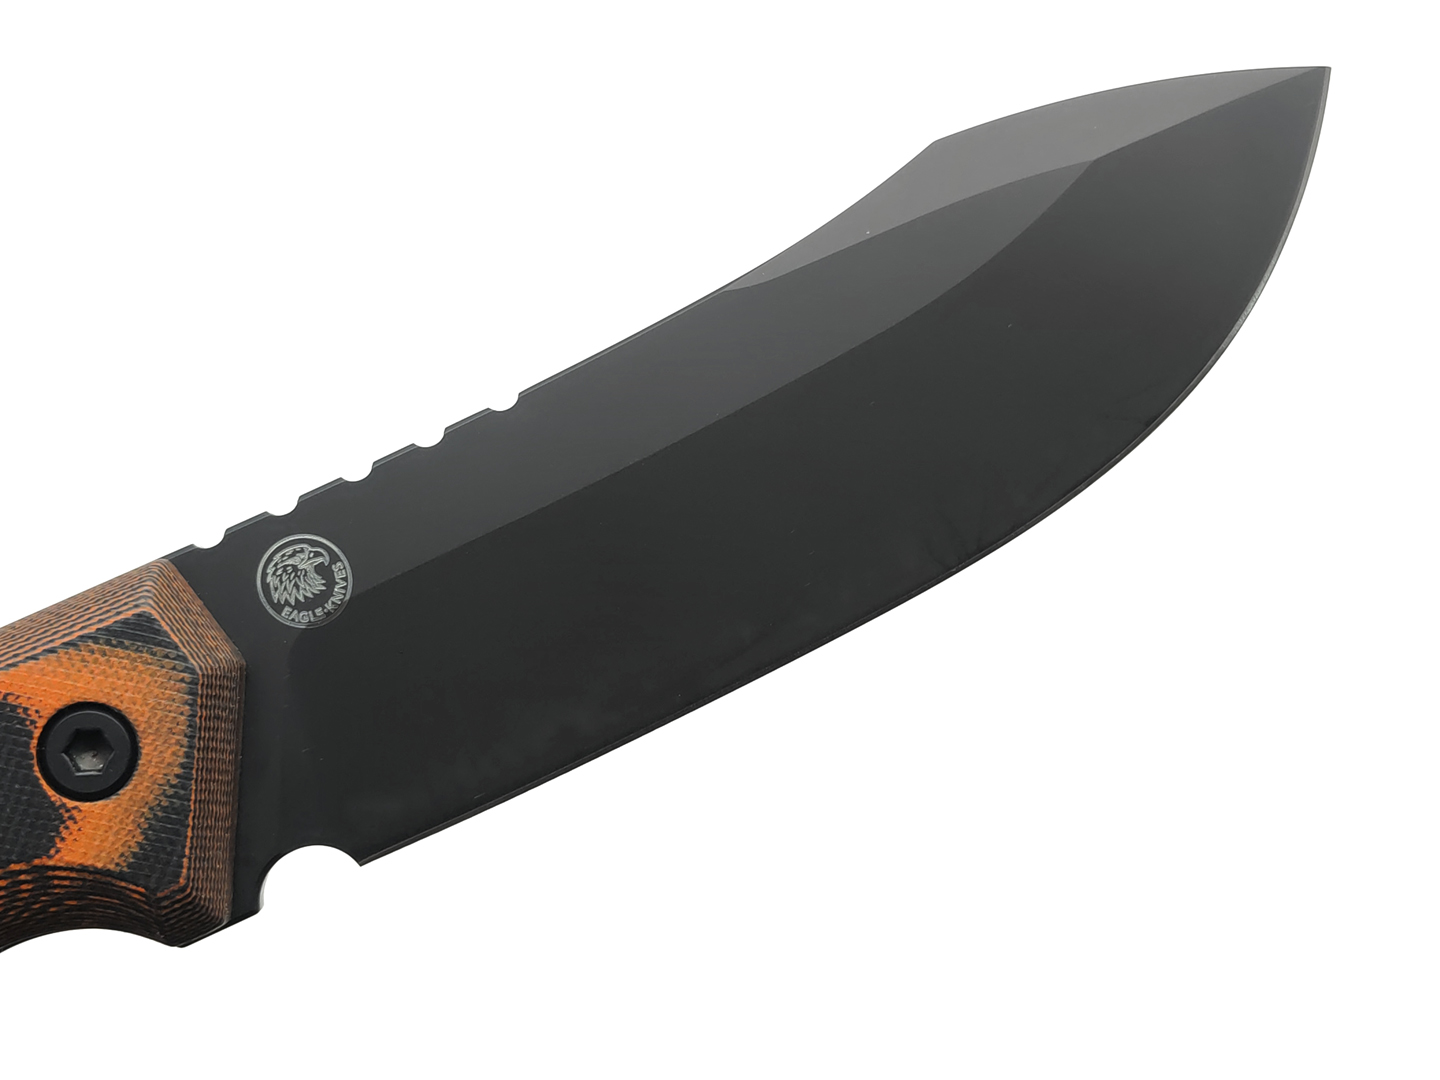 Eagle Knives нож Combat 1 сталь Aus10Co black, рукоять G10 black & orange, ножны Kydex